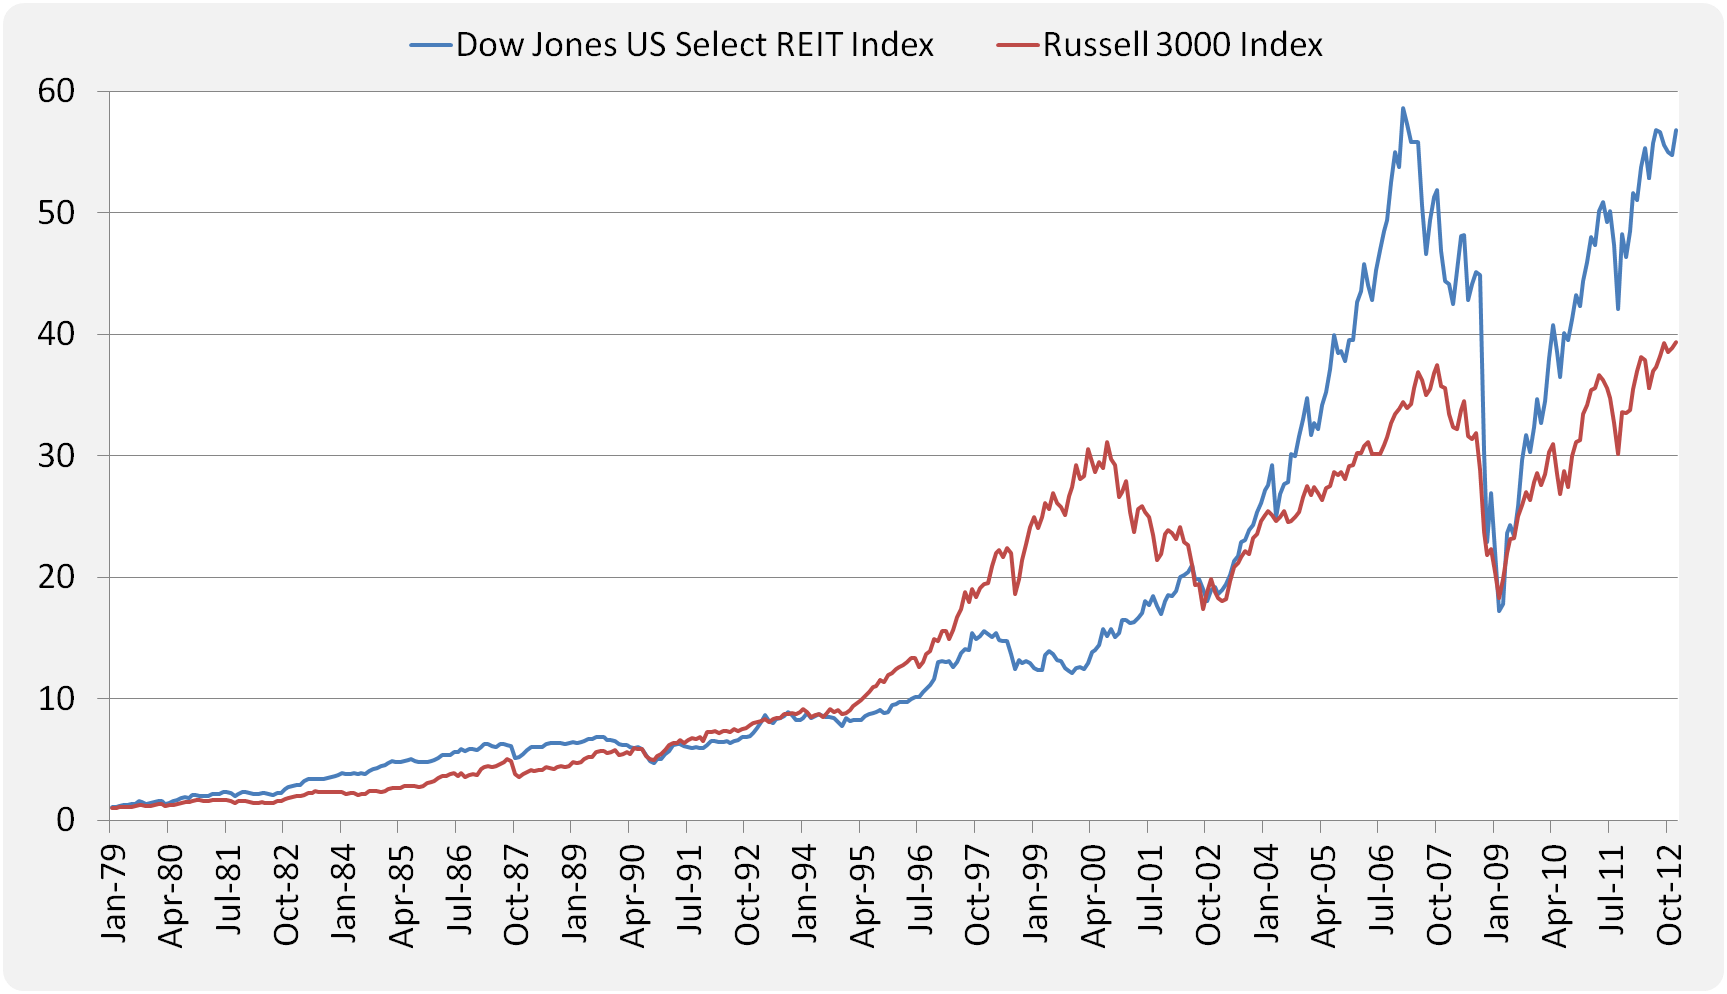 Dow Jones Us Real Estate Index Chart